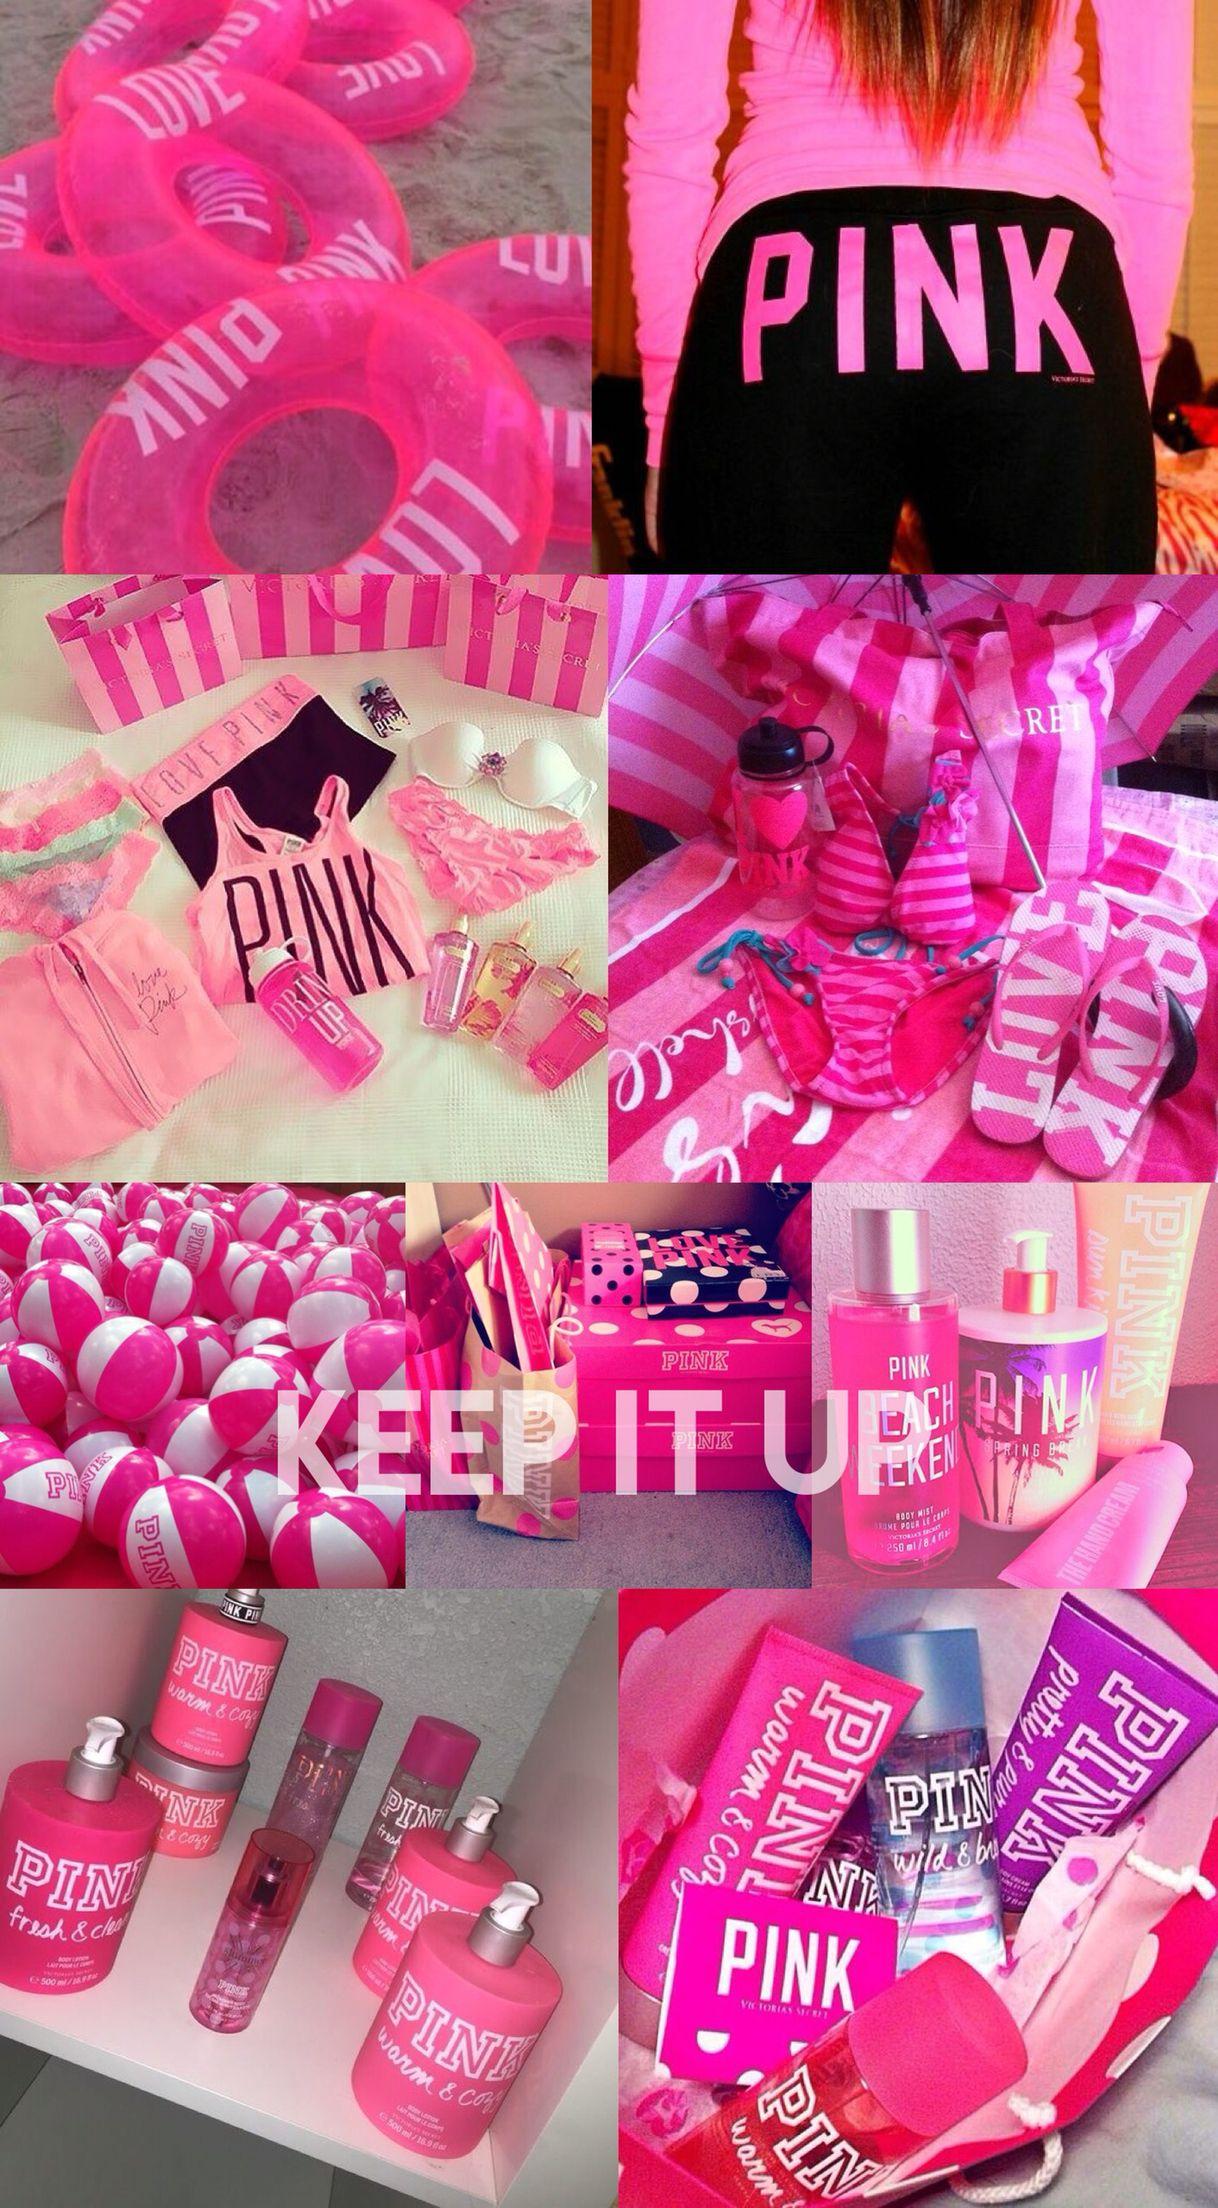 VS, Victoria secret, quote, pink, hot pink, wallpaper, background